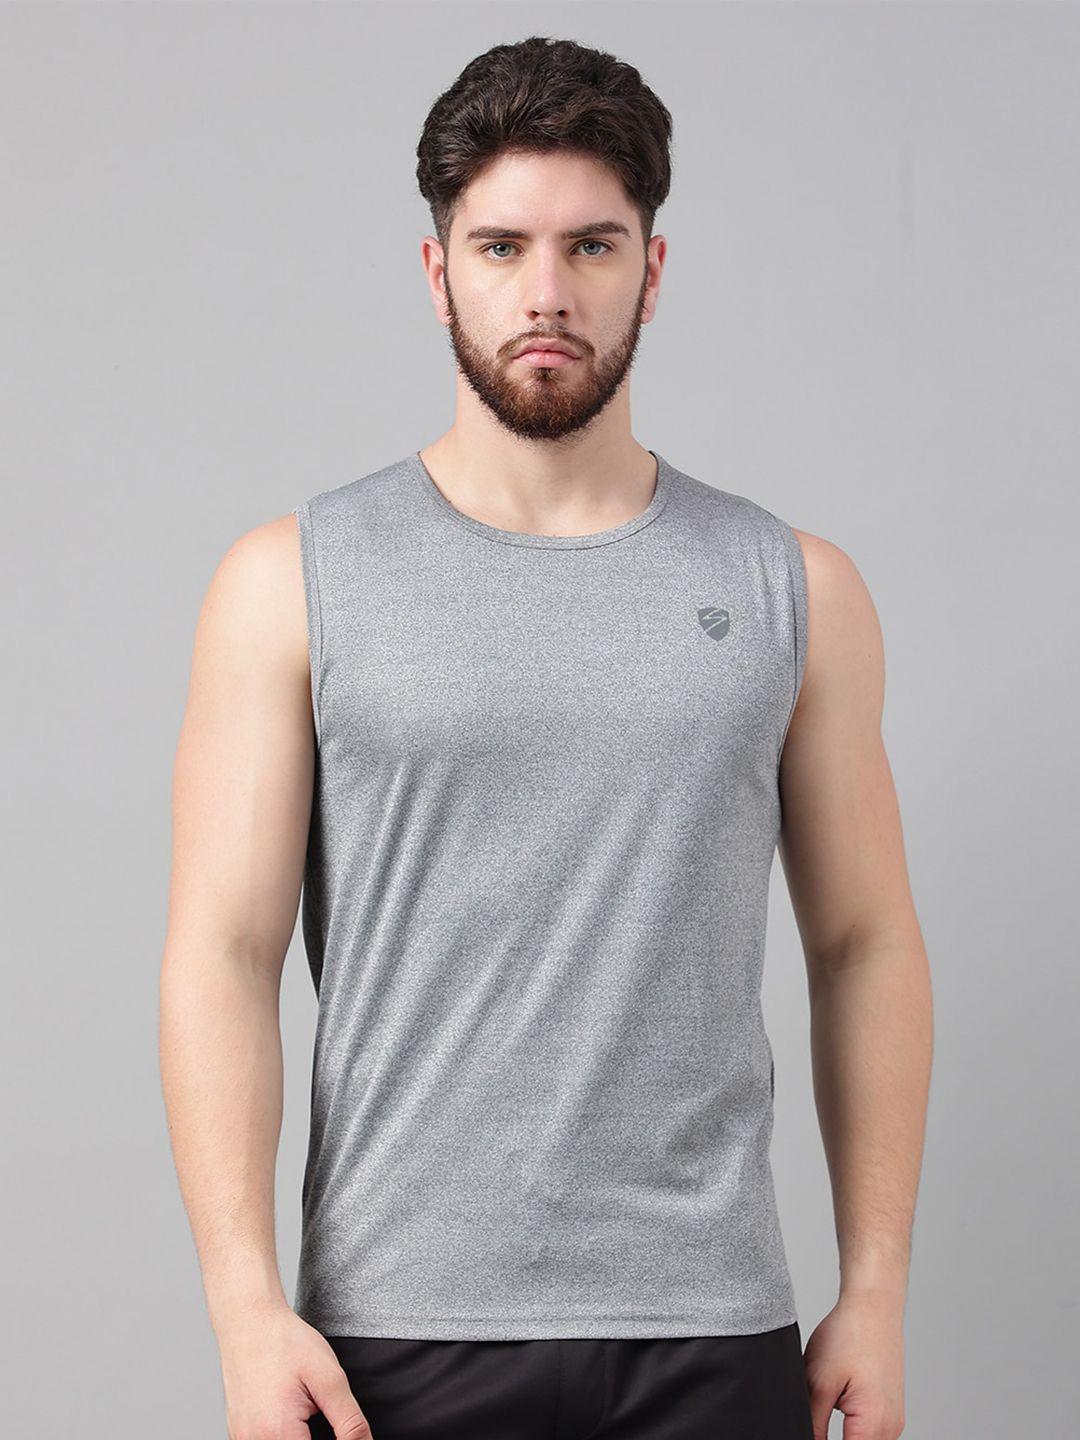 unpar-sleeveless-training-or-gym-sports-t-shirt